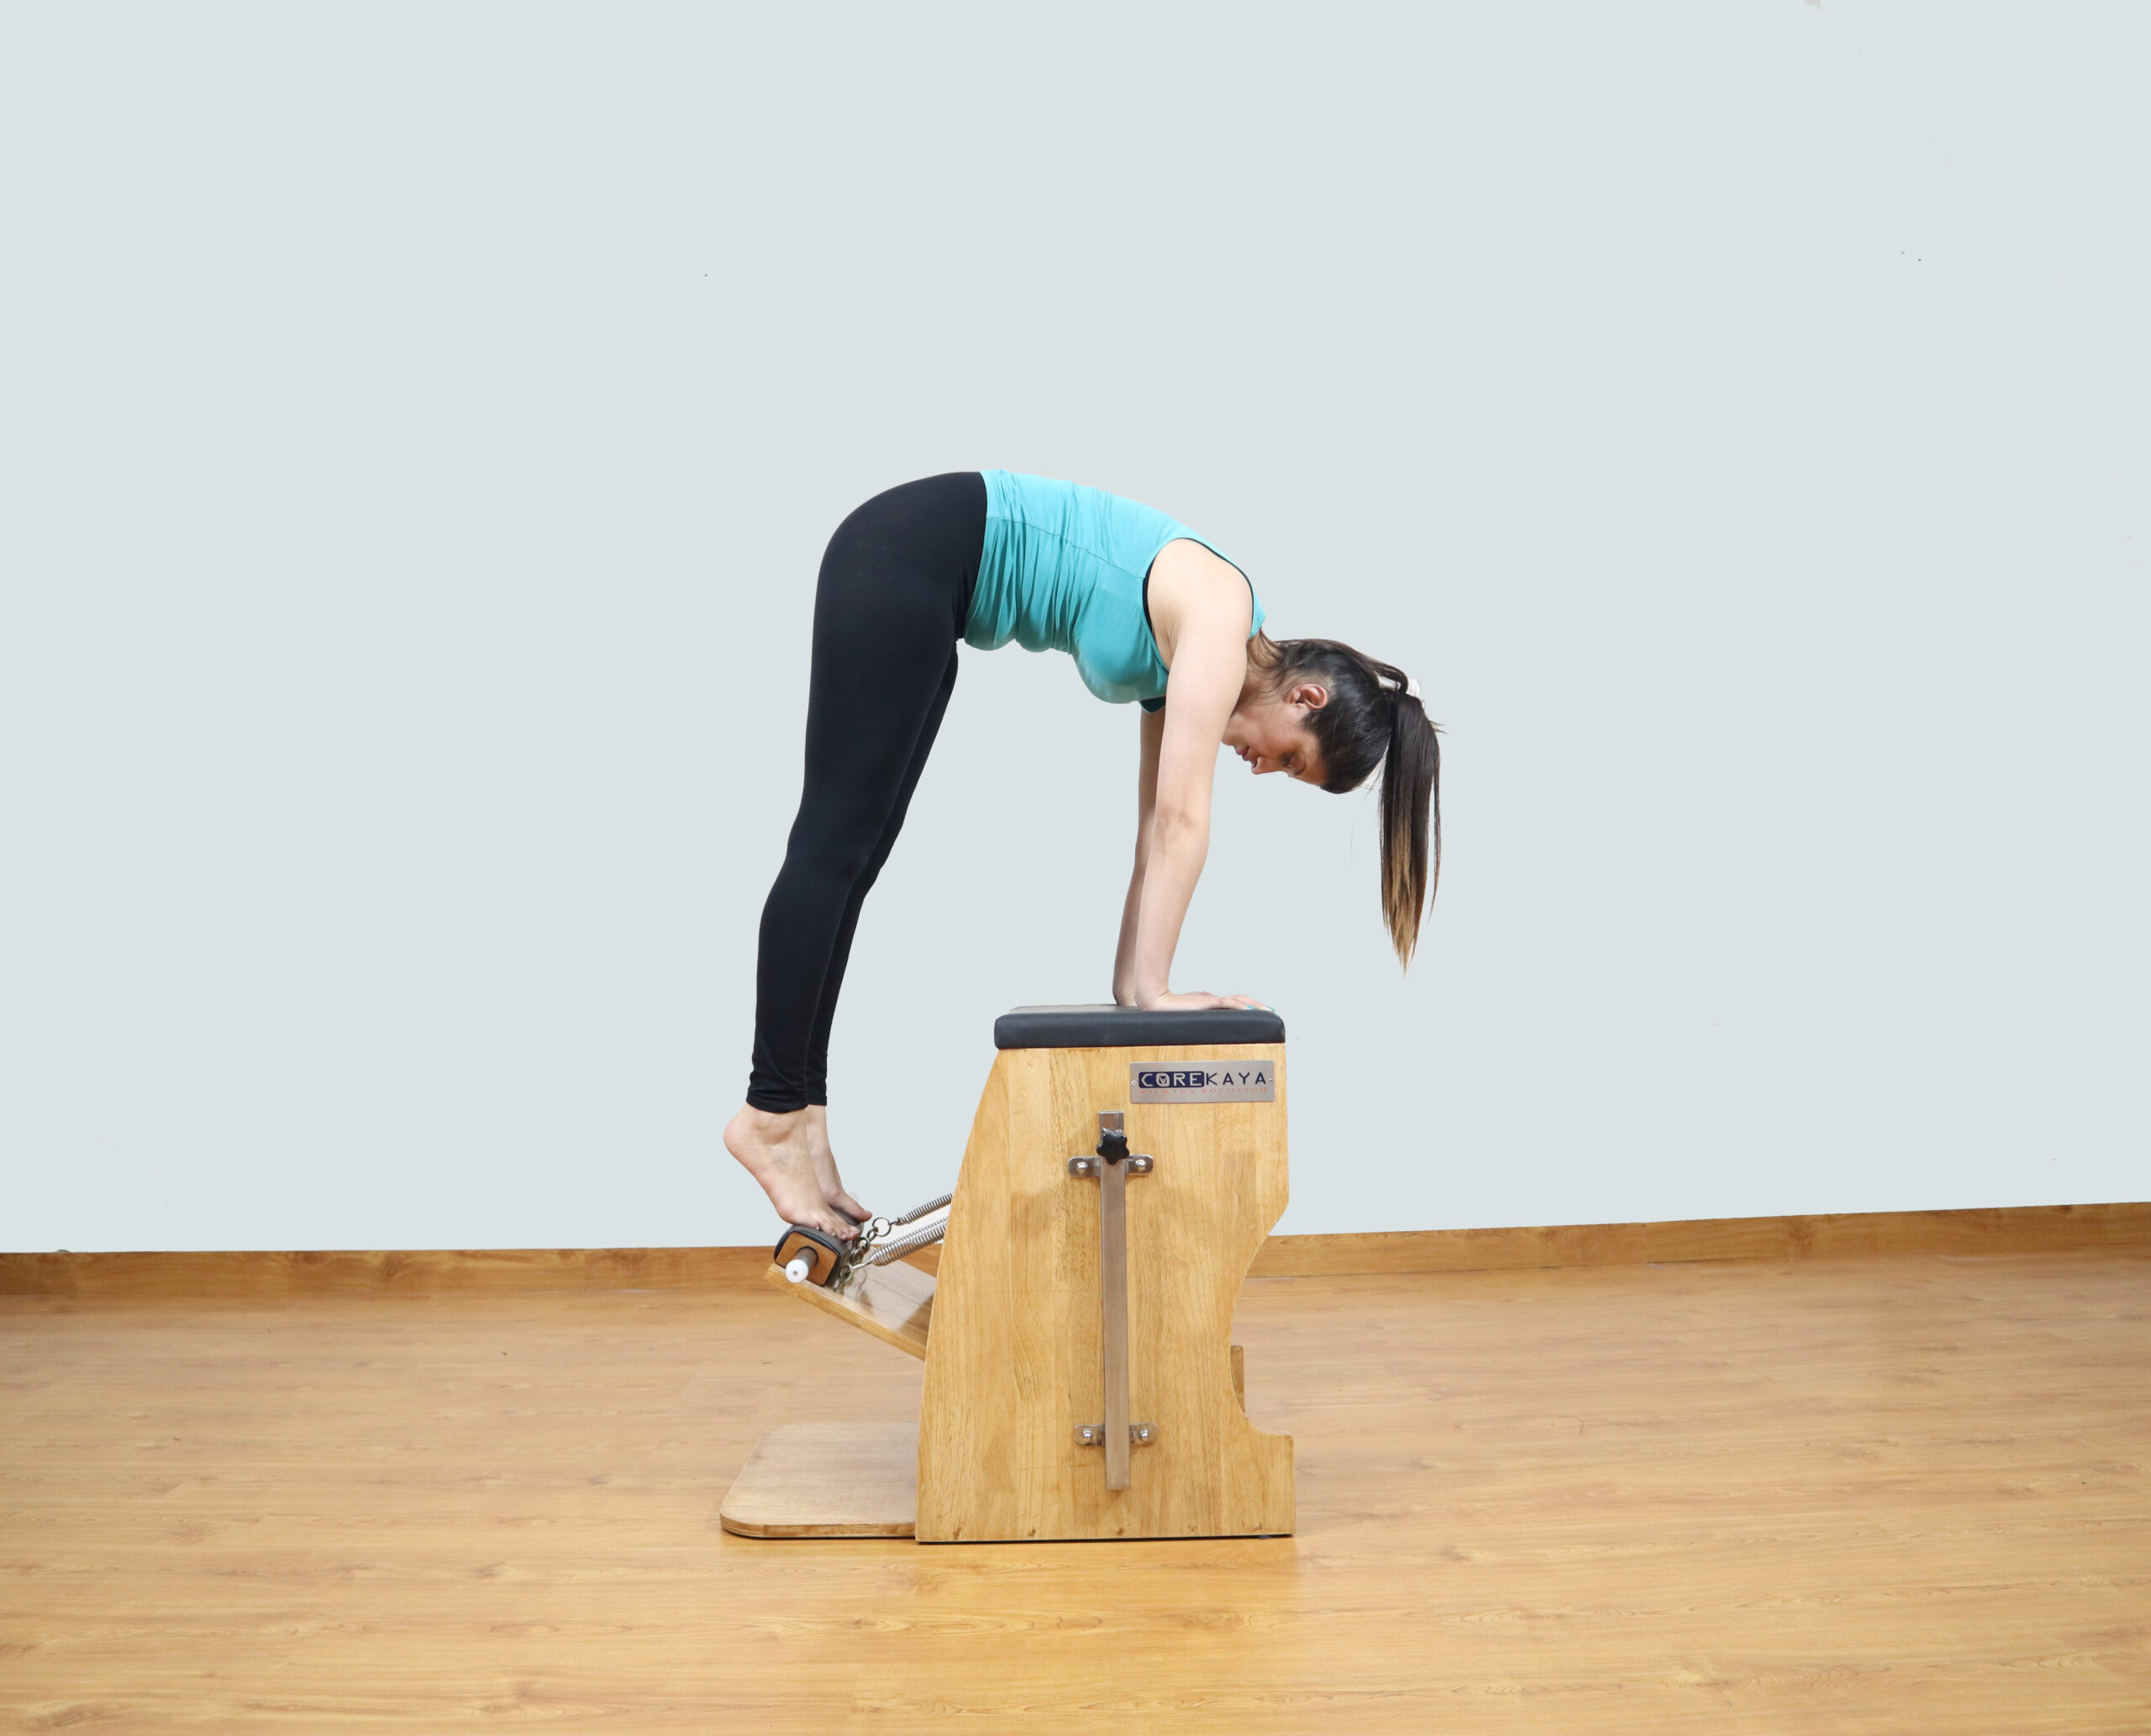 CoreKaya Pilates Wunda Chair - A versatile and ergonomic fitness chair for all levels.